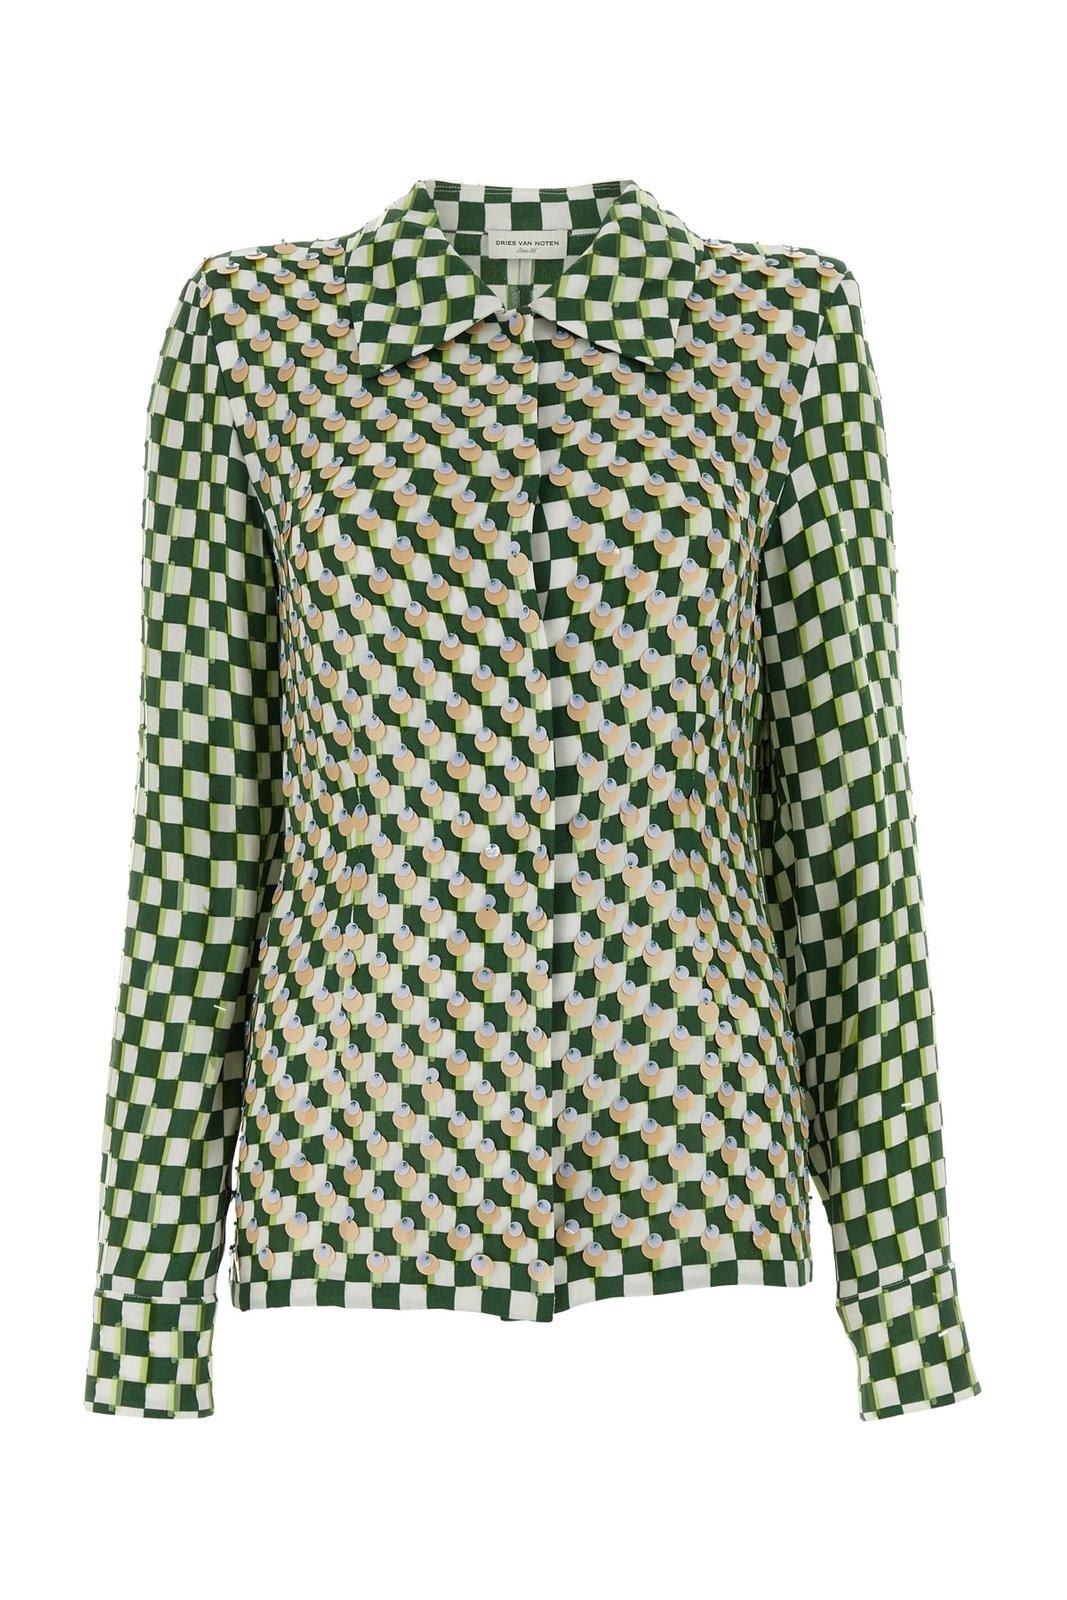 Dries Van Noten Checked Embellished Shirt In Green